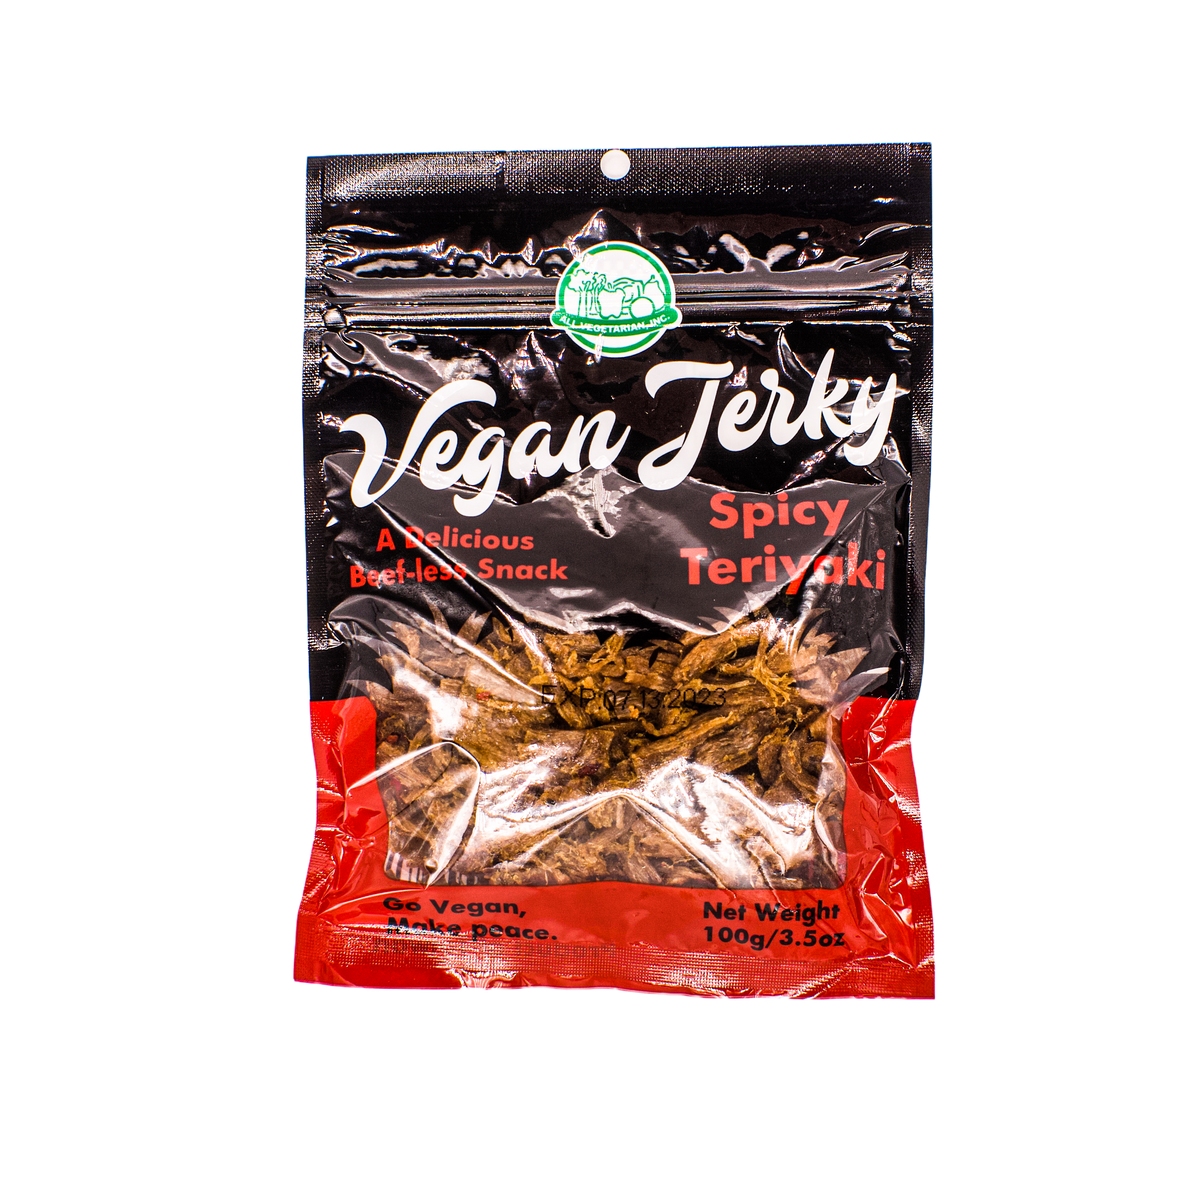 All Vegetarian Inc Jerky Spicy Teriyaki